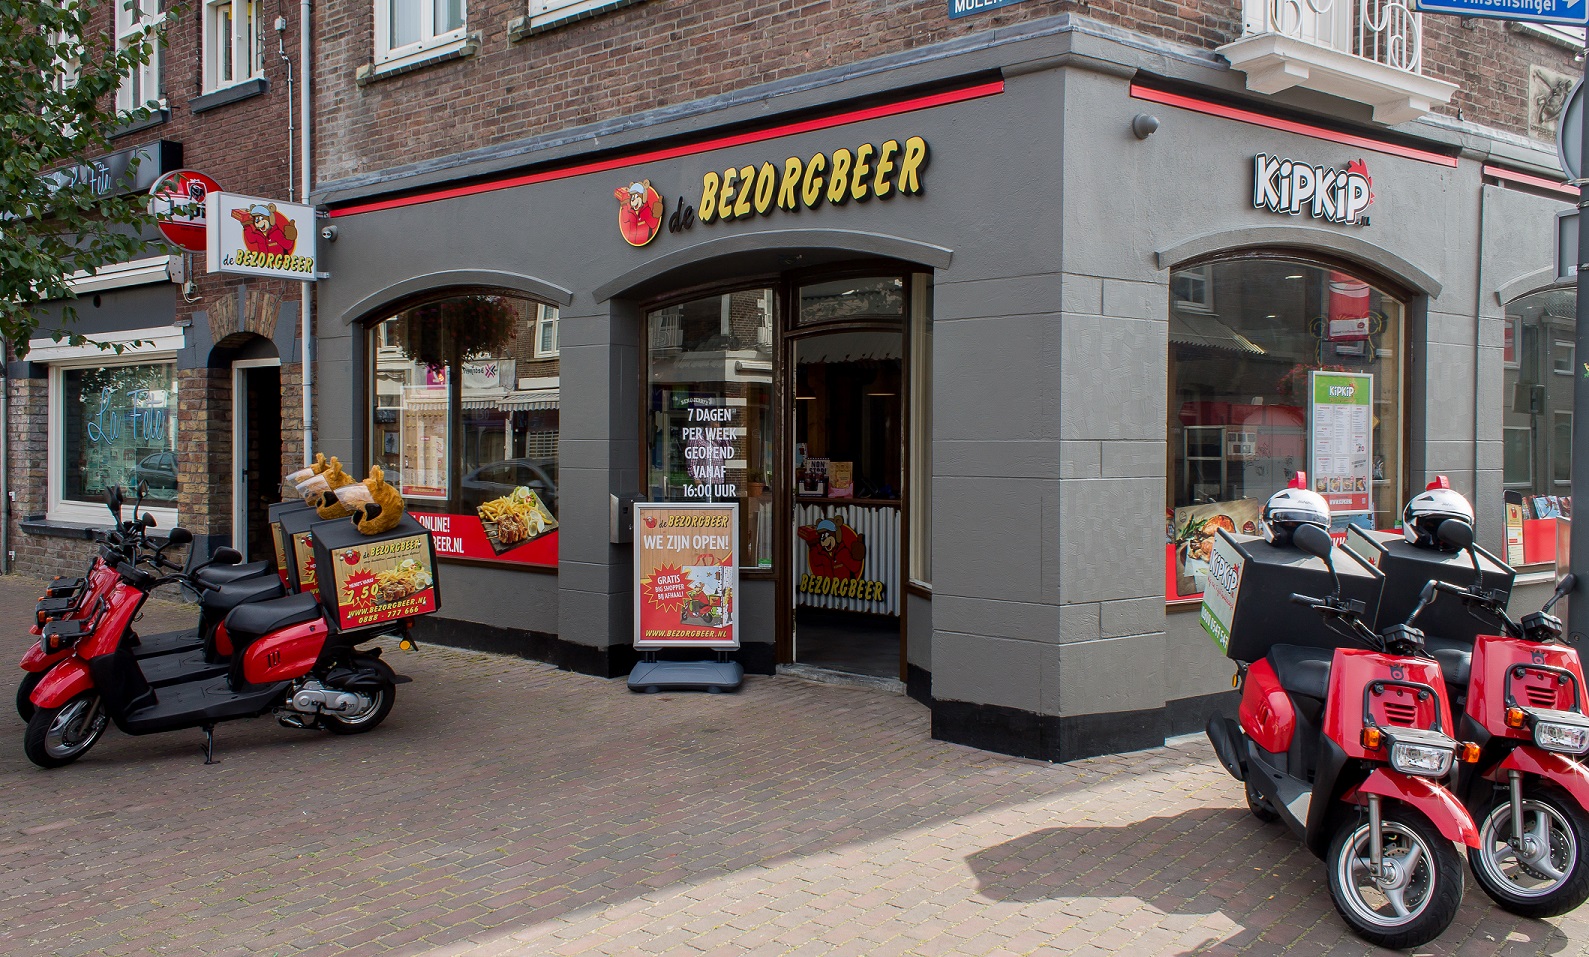 Bezorgbeer en KipKip.nl openen samen in Roosendaal. Bron: FranchiseFormules.NL